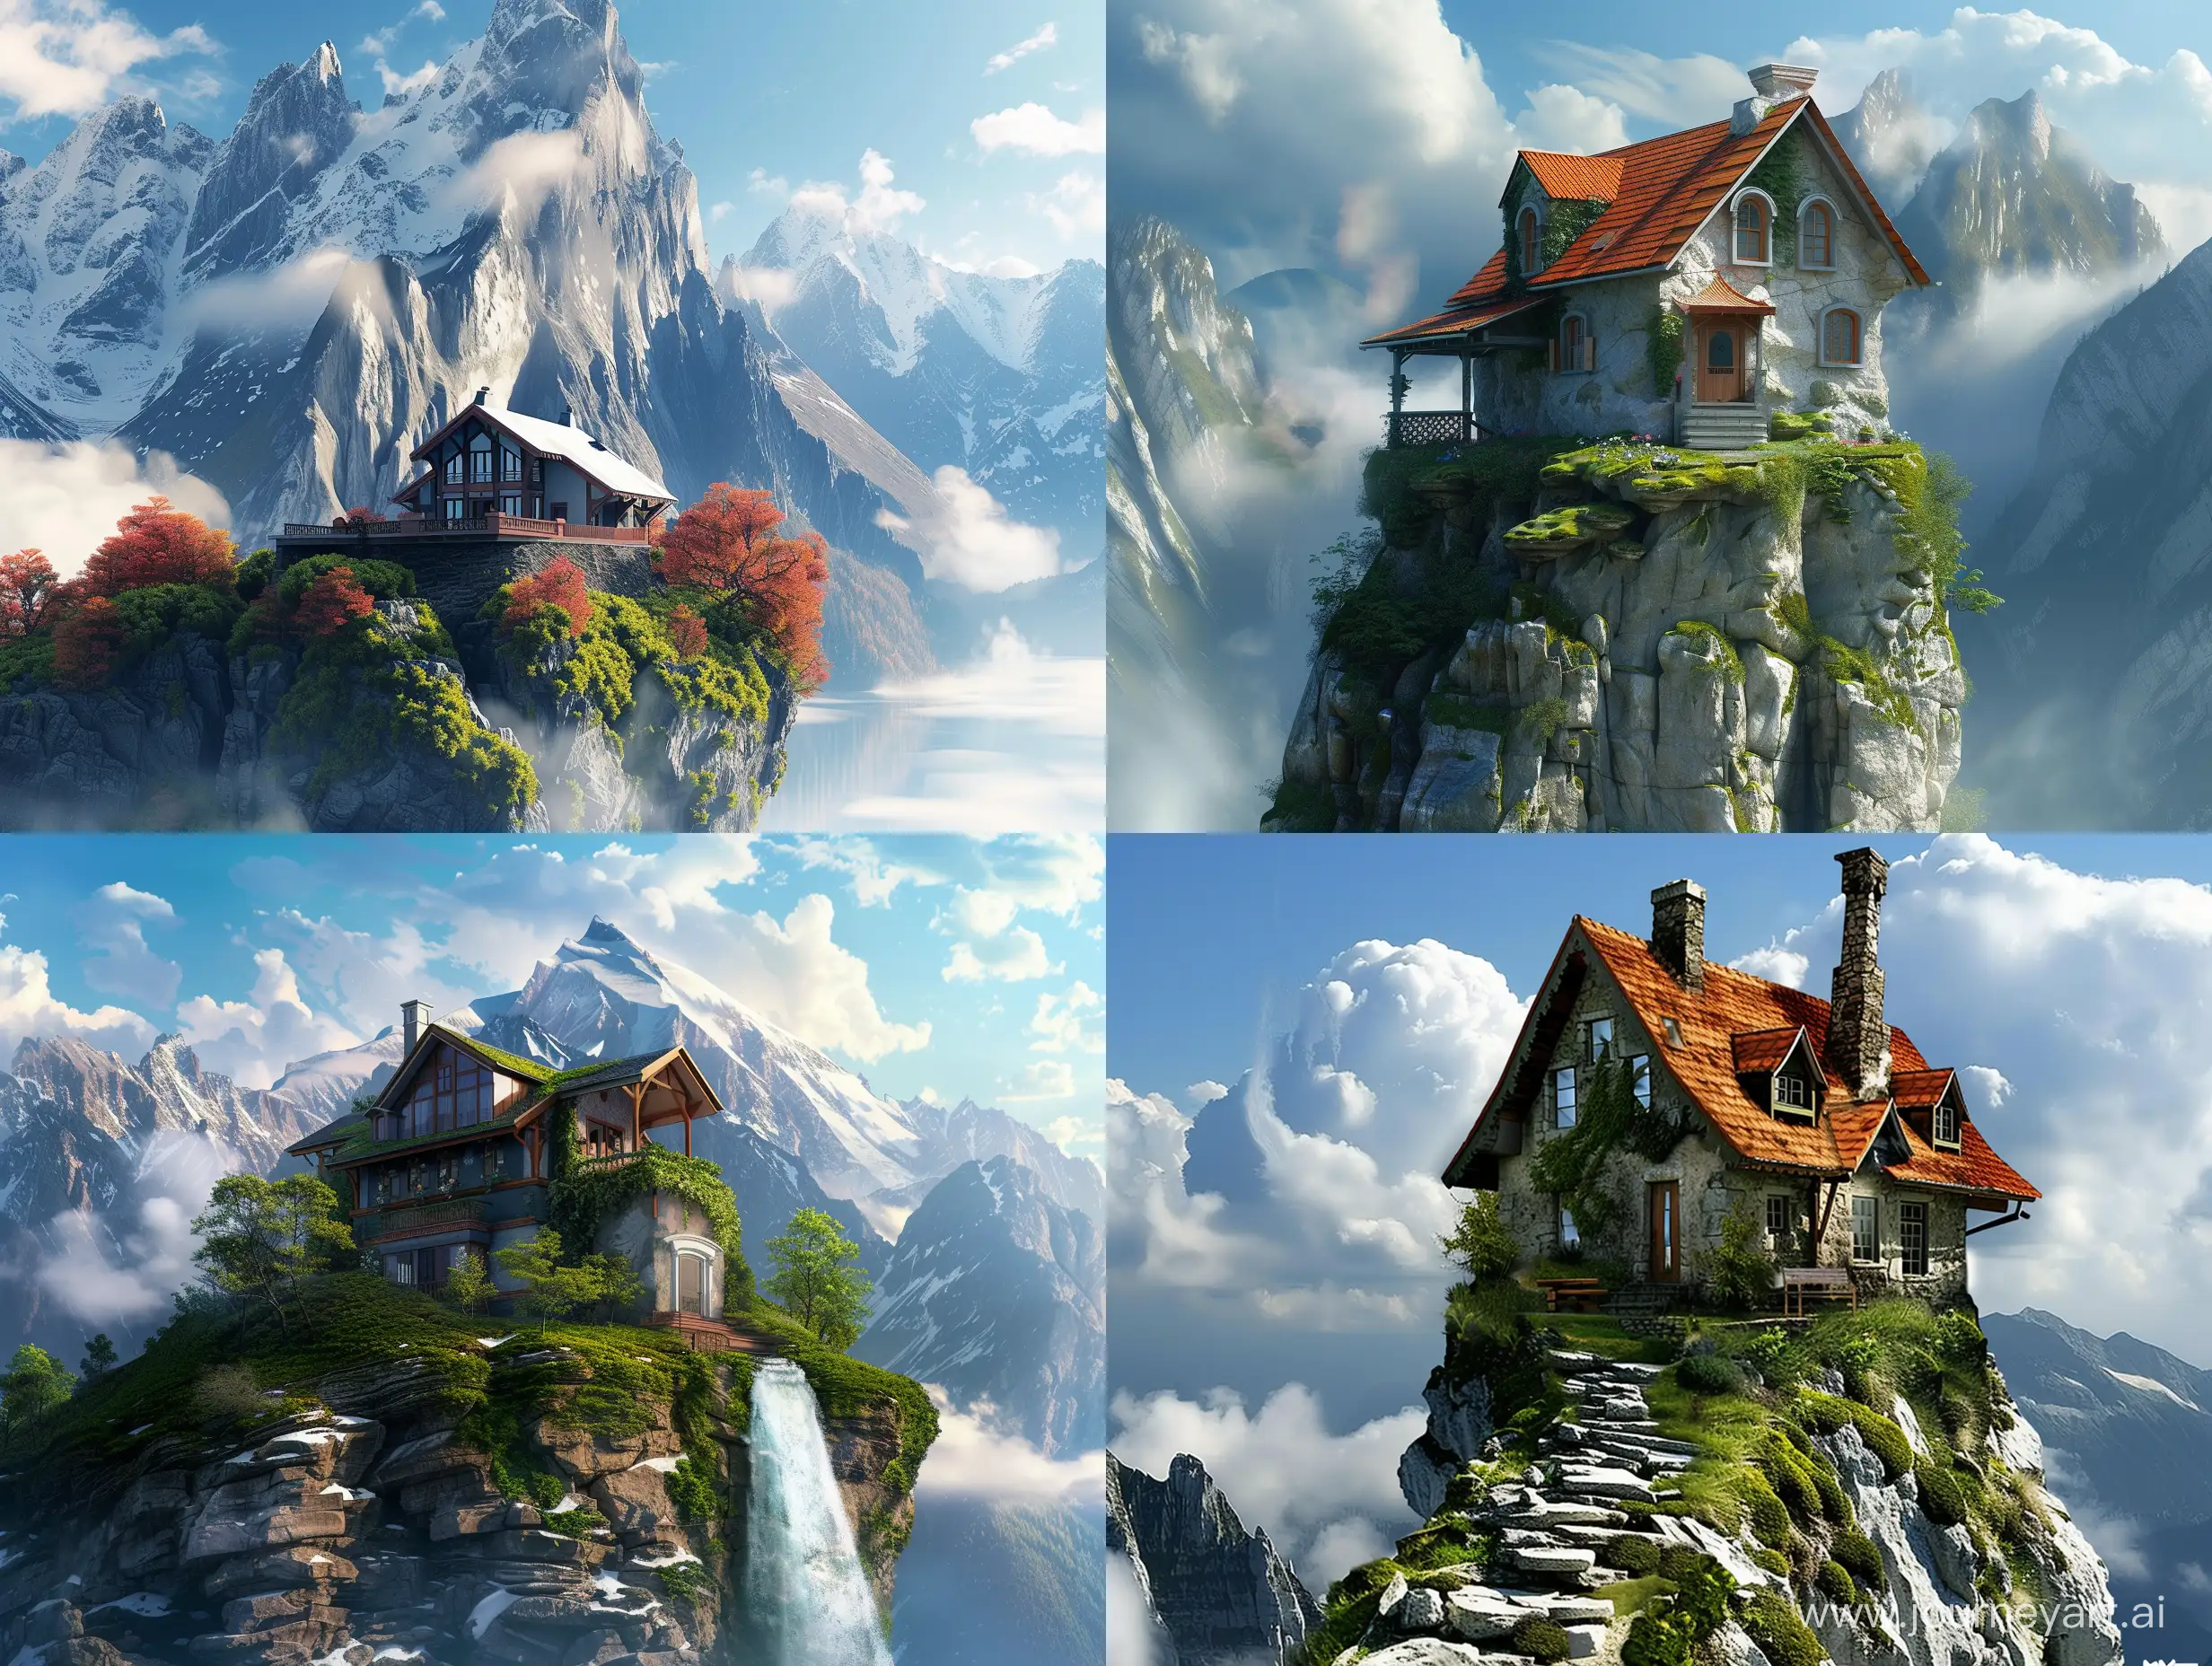 Enchanting-MountainHouse-Fusion-A-Dreamlike-Fantasy-Landscape